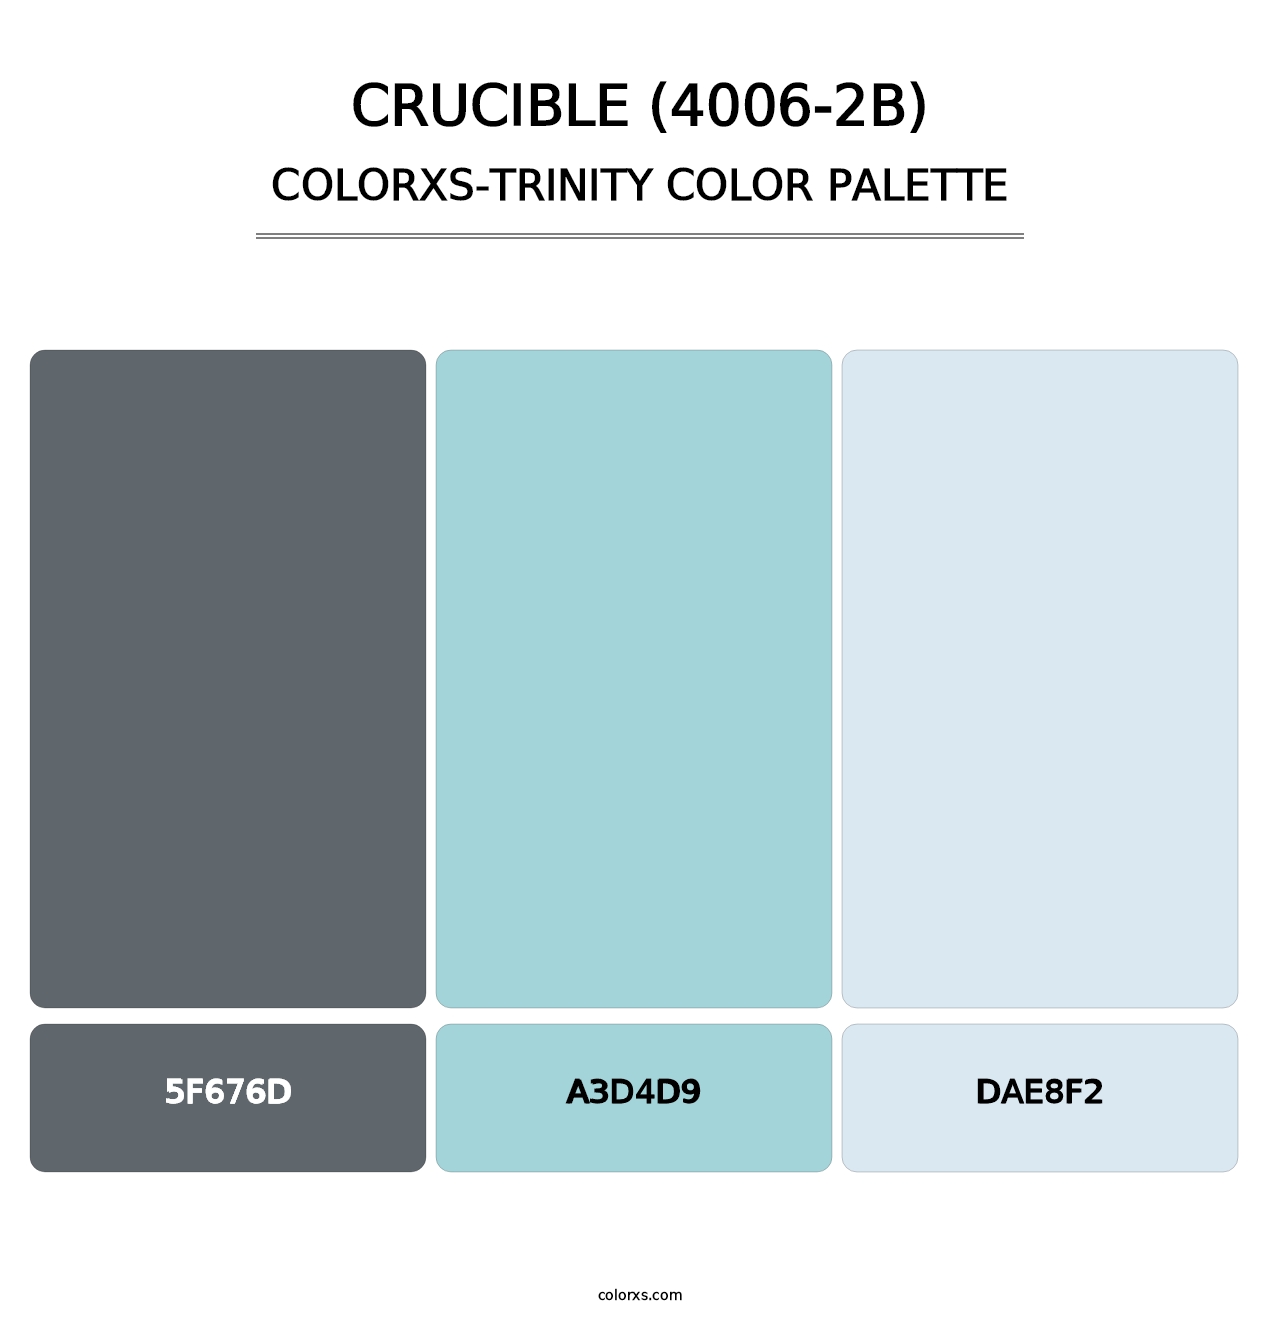 Crucible (4006-2B) - Colorxs Trinity Palette